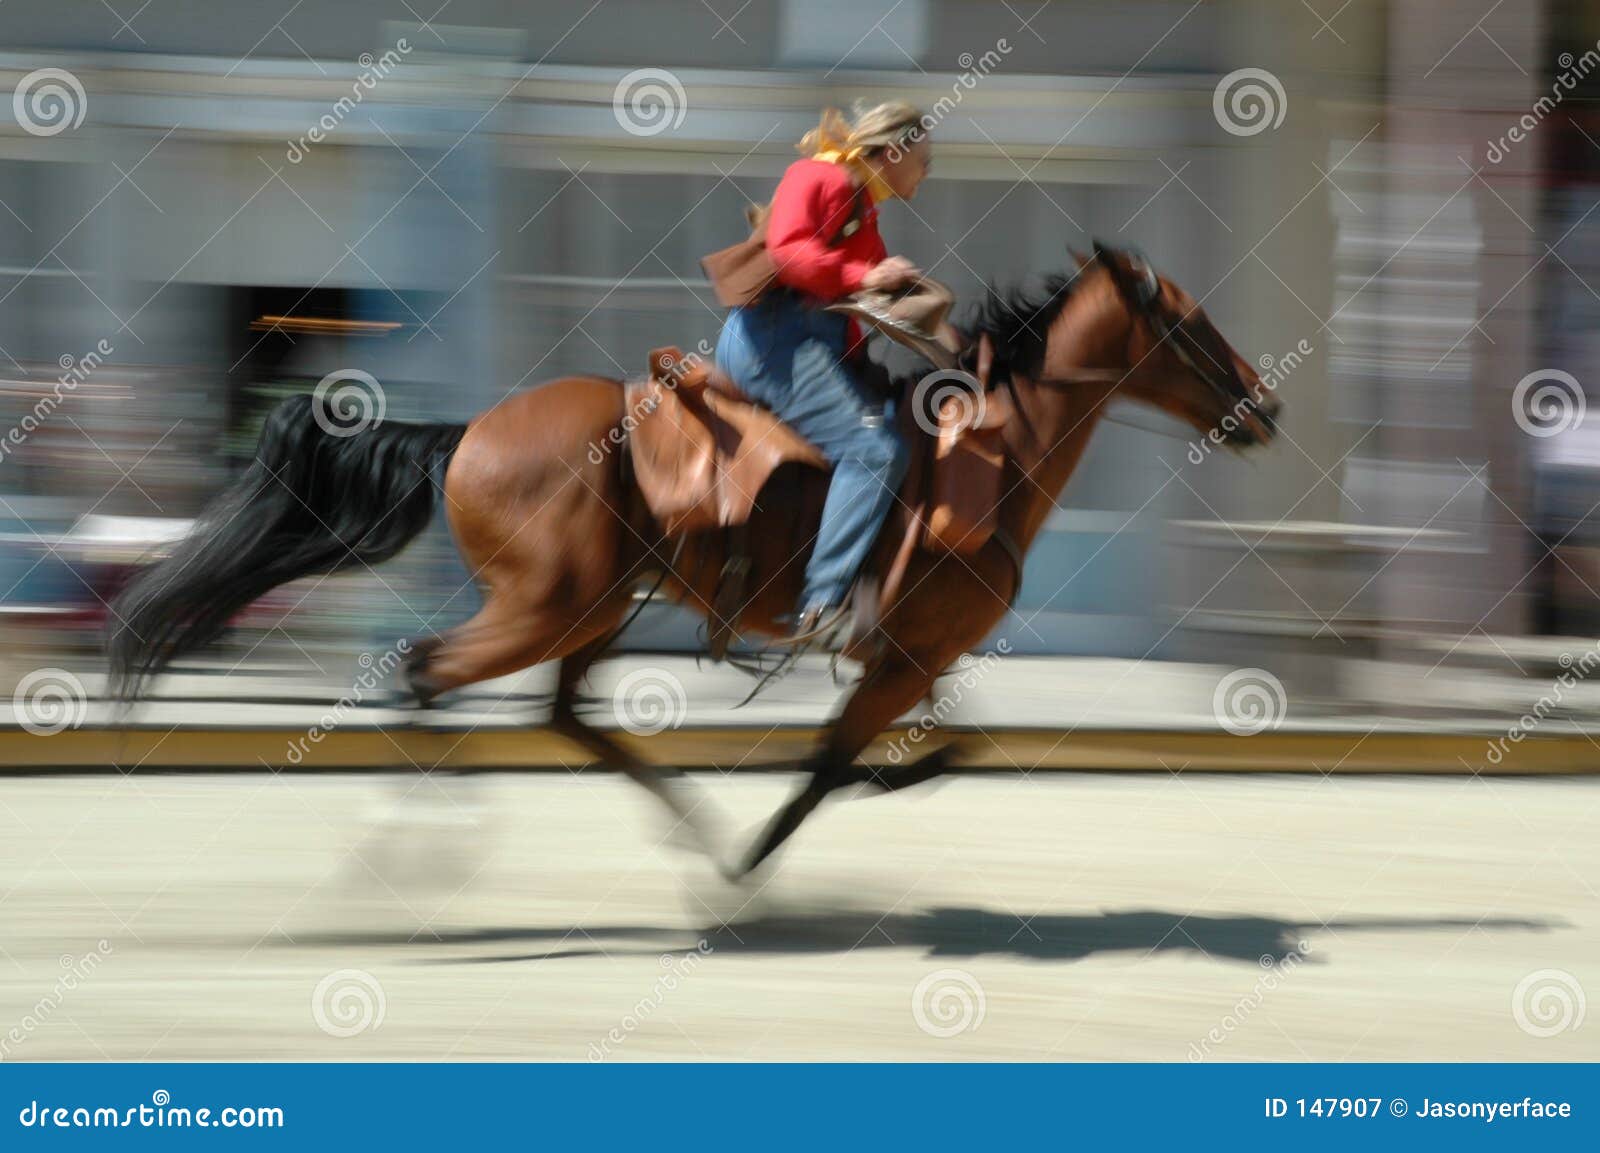 pony express rides again